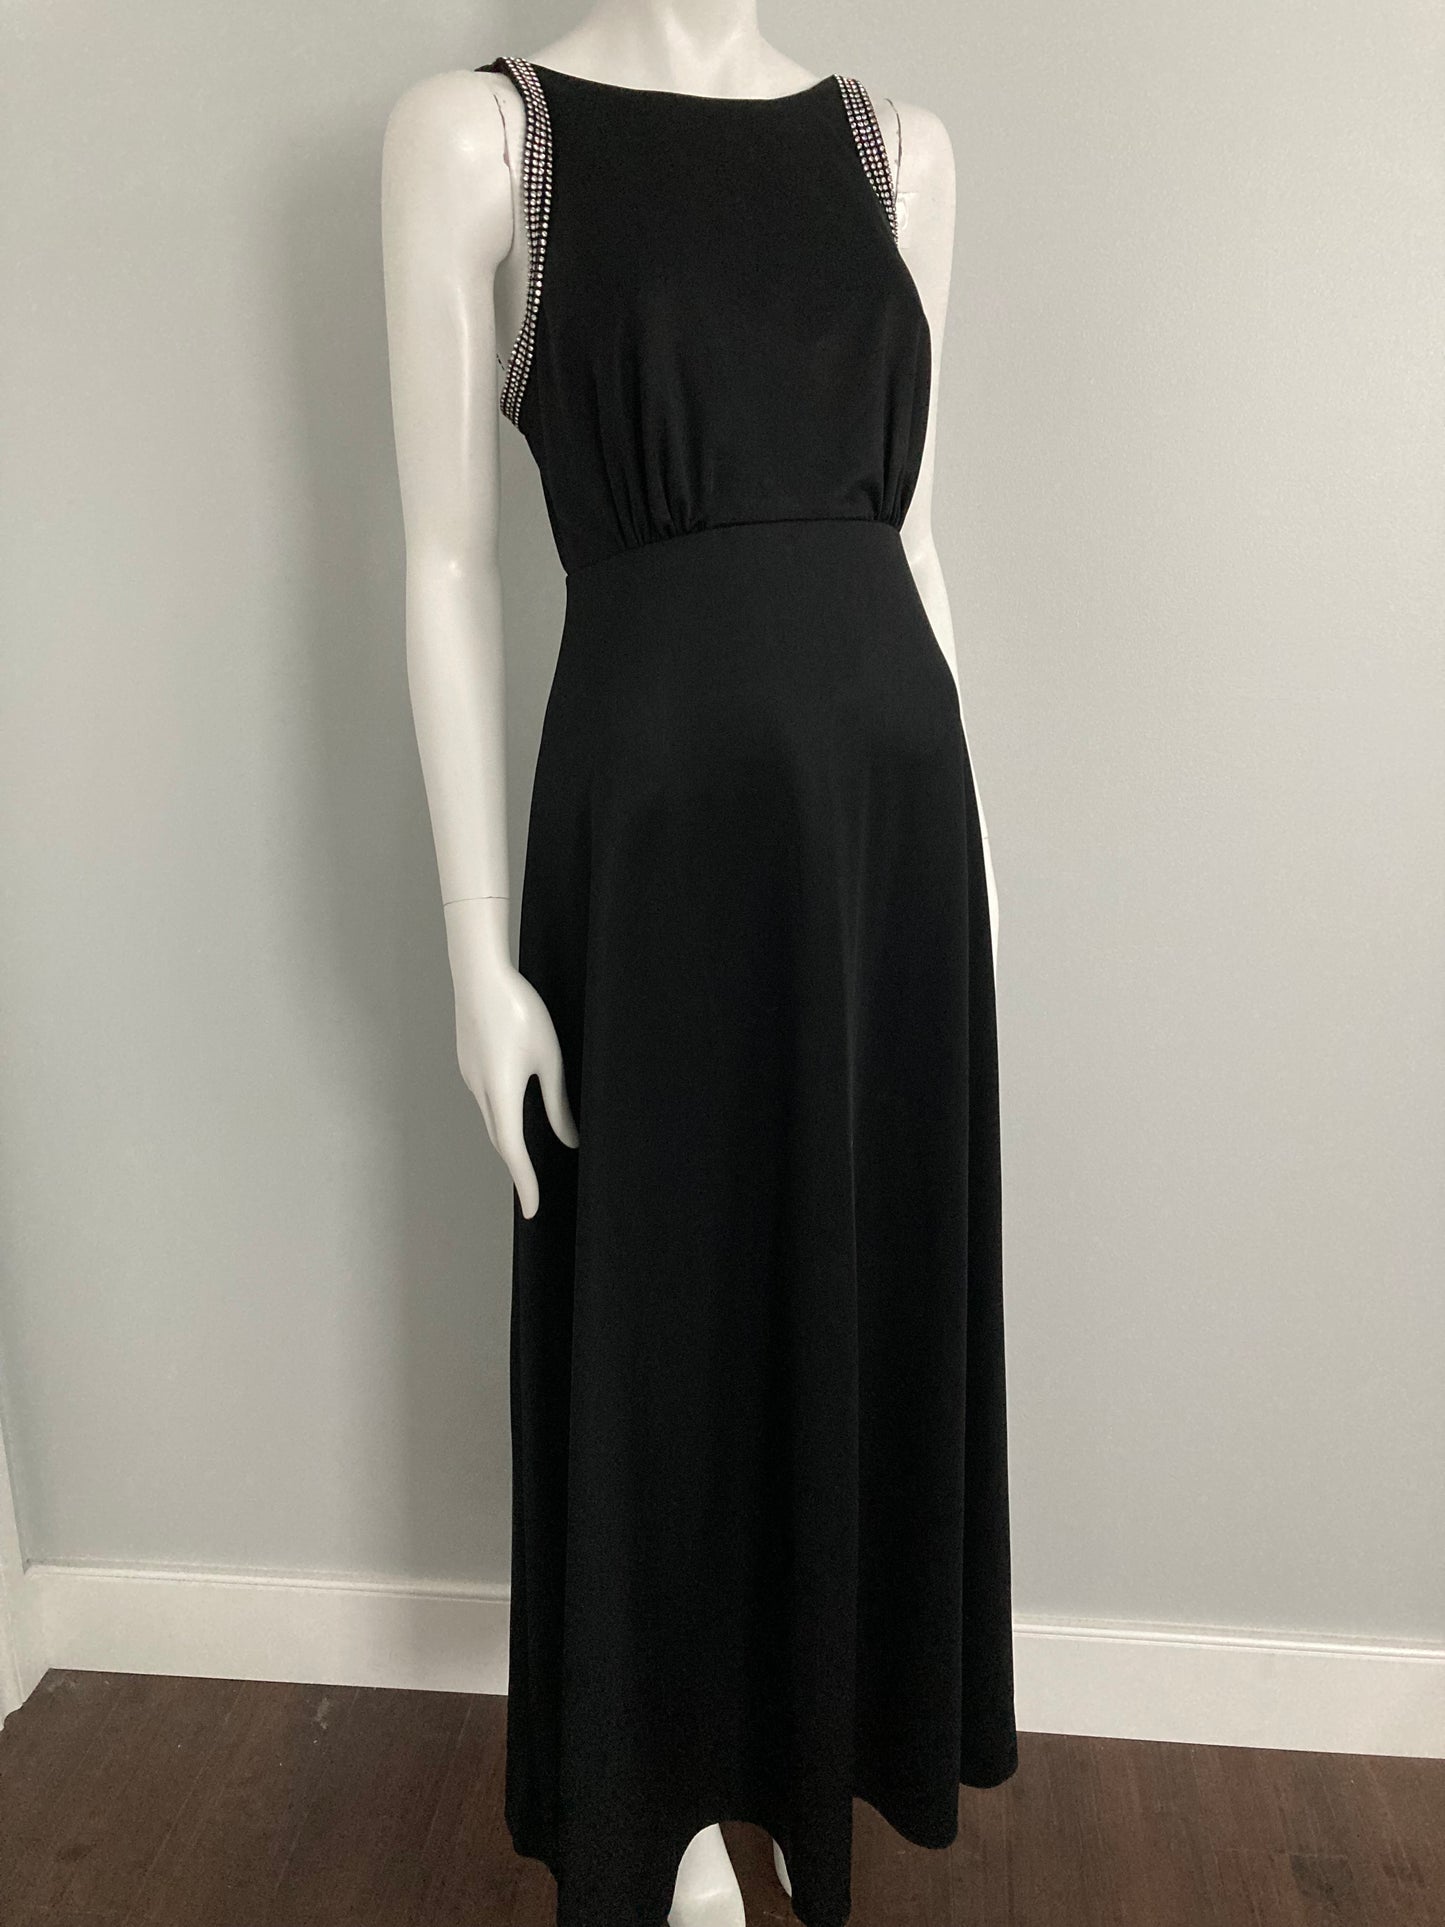 1970s Black Rhinestone Maxi Dress, Party Dress, Grad Dress, Size S